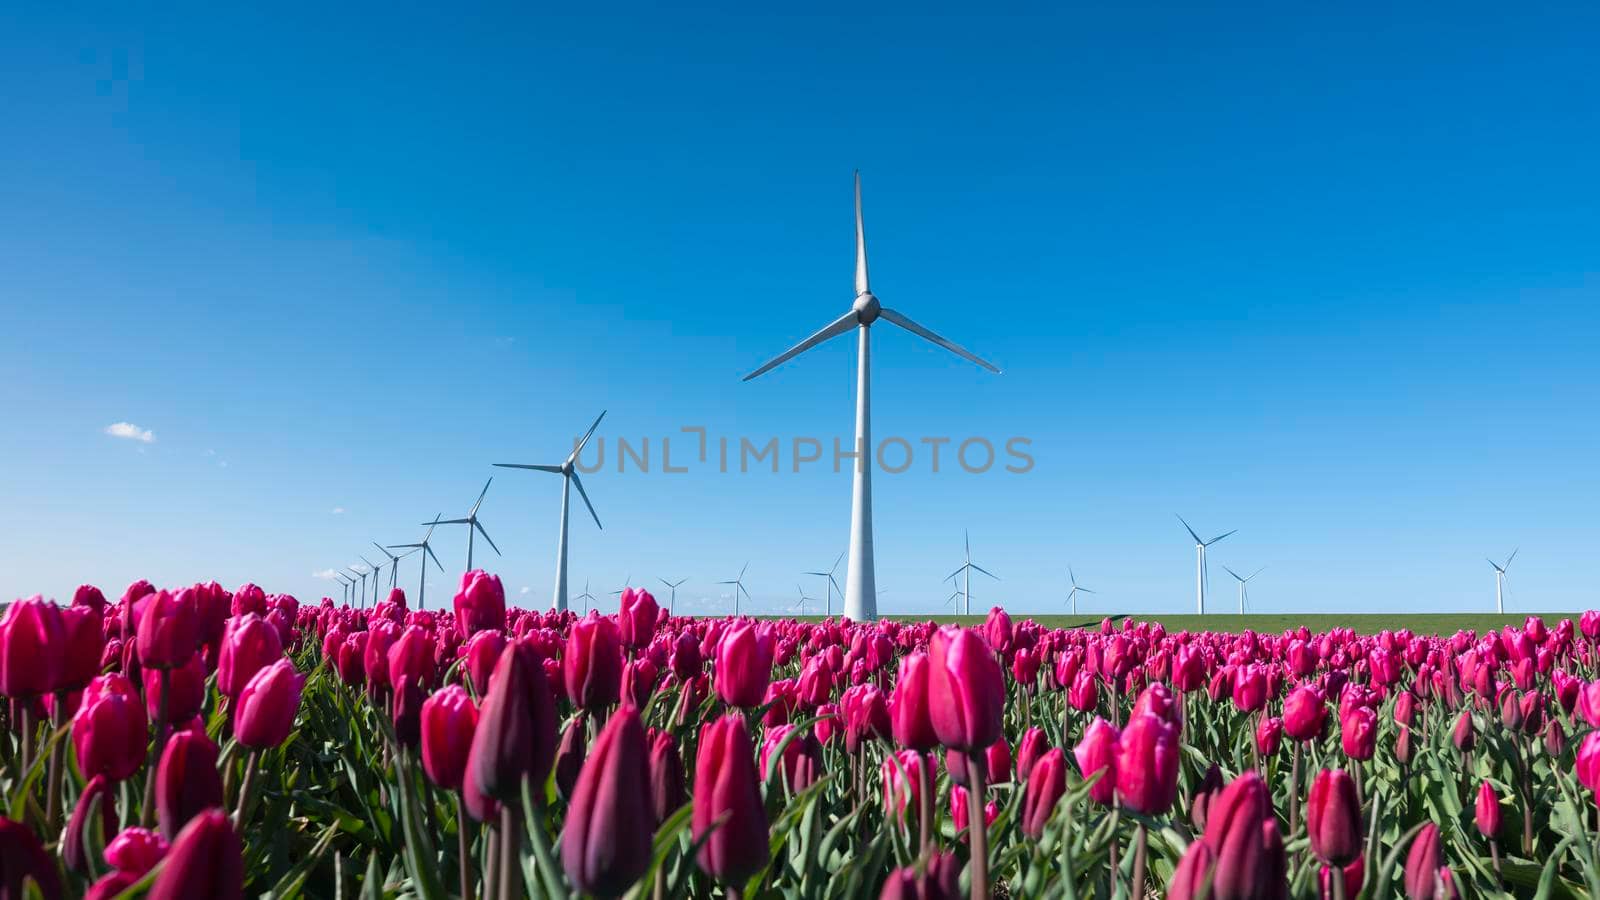 dutch region noordoostpolder with wind turbines and red tulips under blue sky in the netherlands